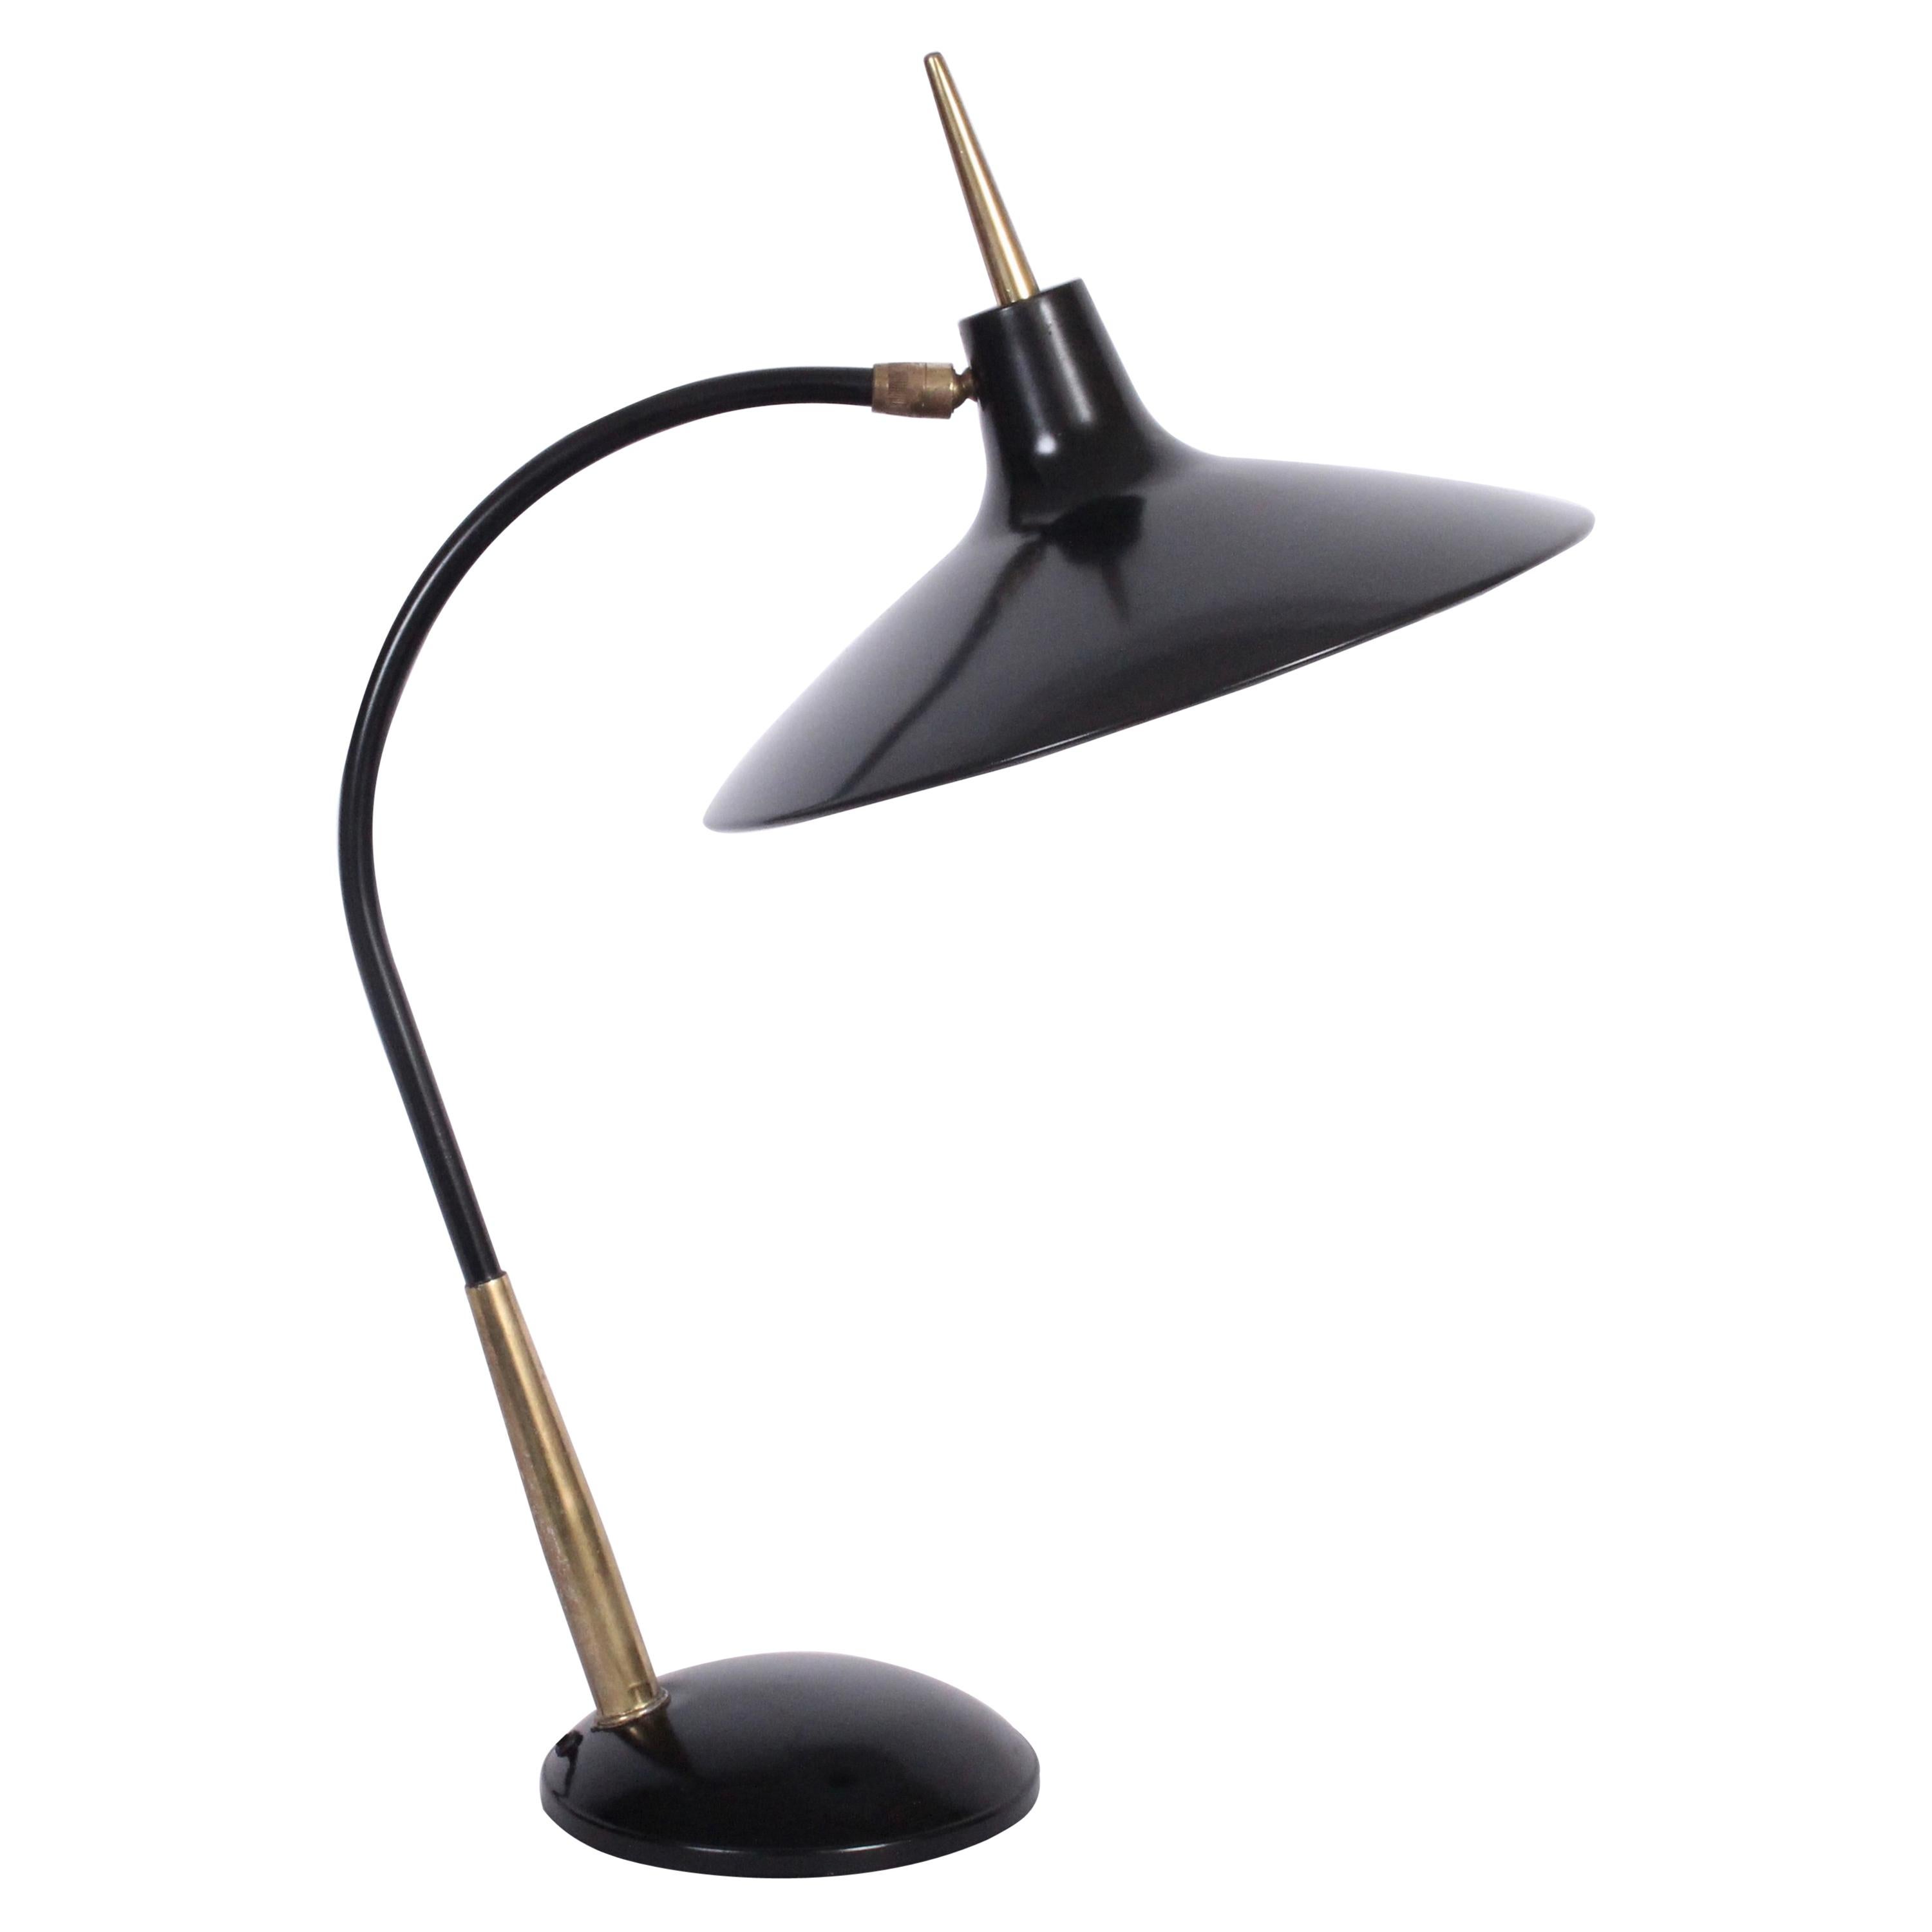 Laurel Lamp Mfg. Co. Black and Brass Desk Lamp with Black Enamel Shade